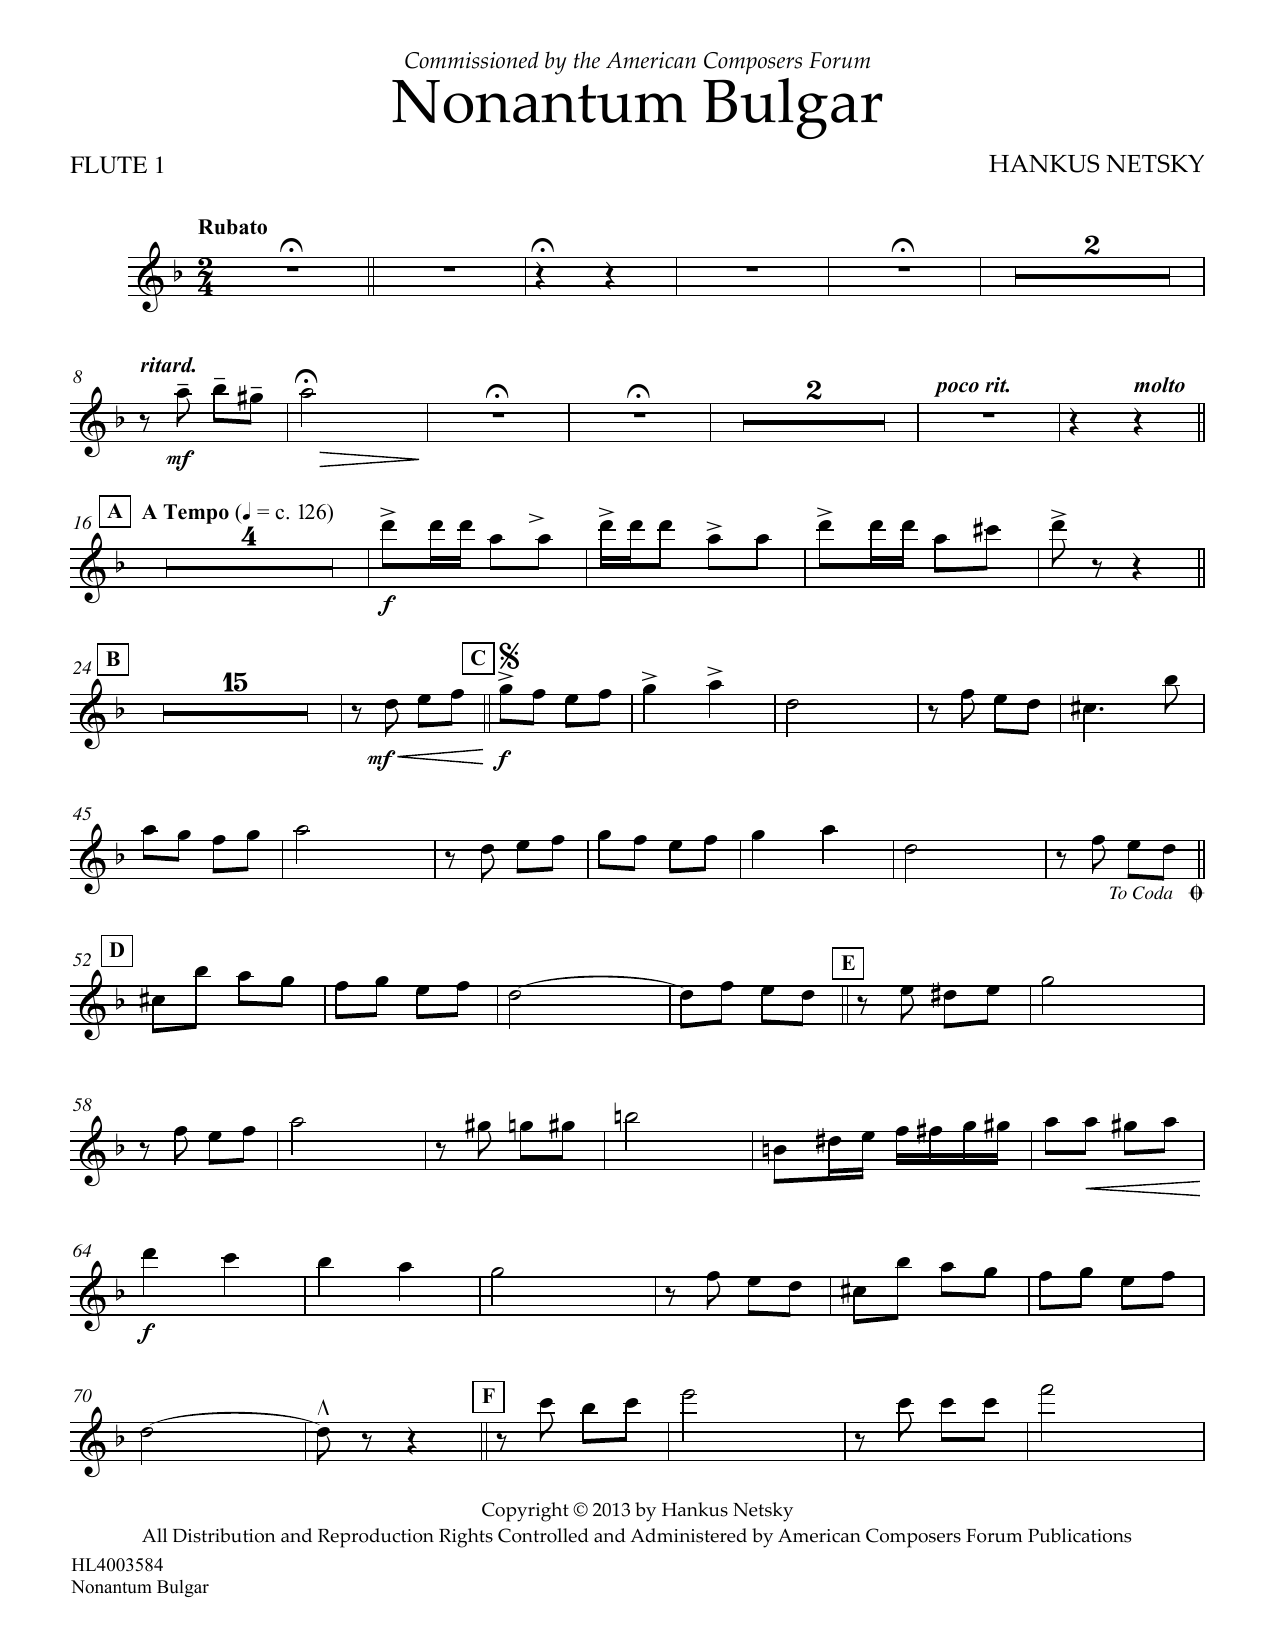 Download Hankus Netsky Nonantum Bulgar - Flute 1 Sheet Music